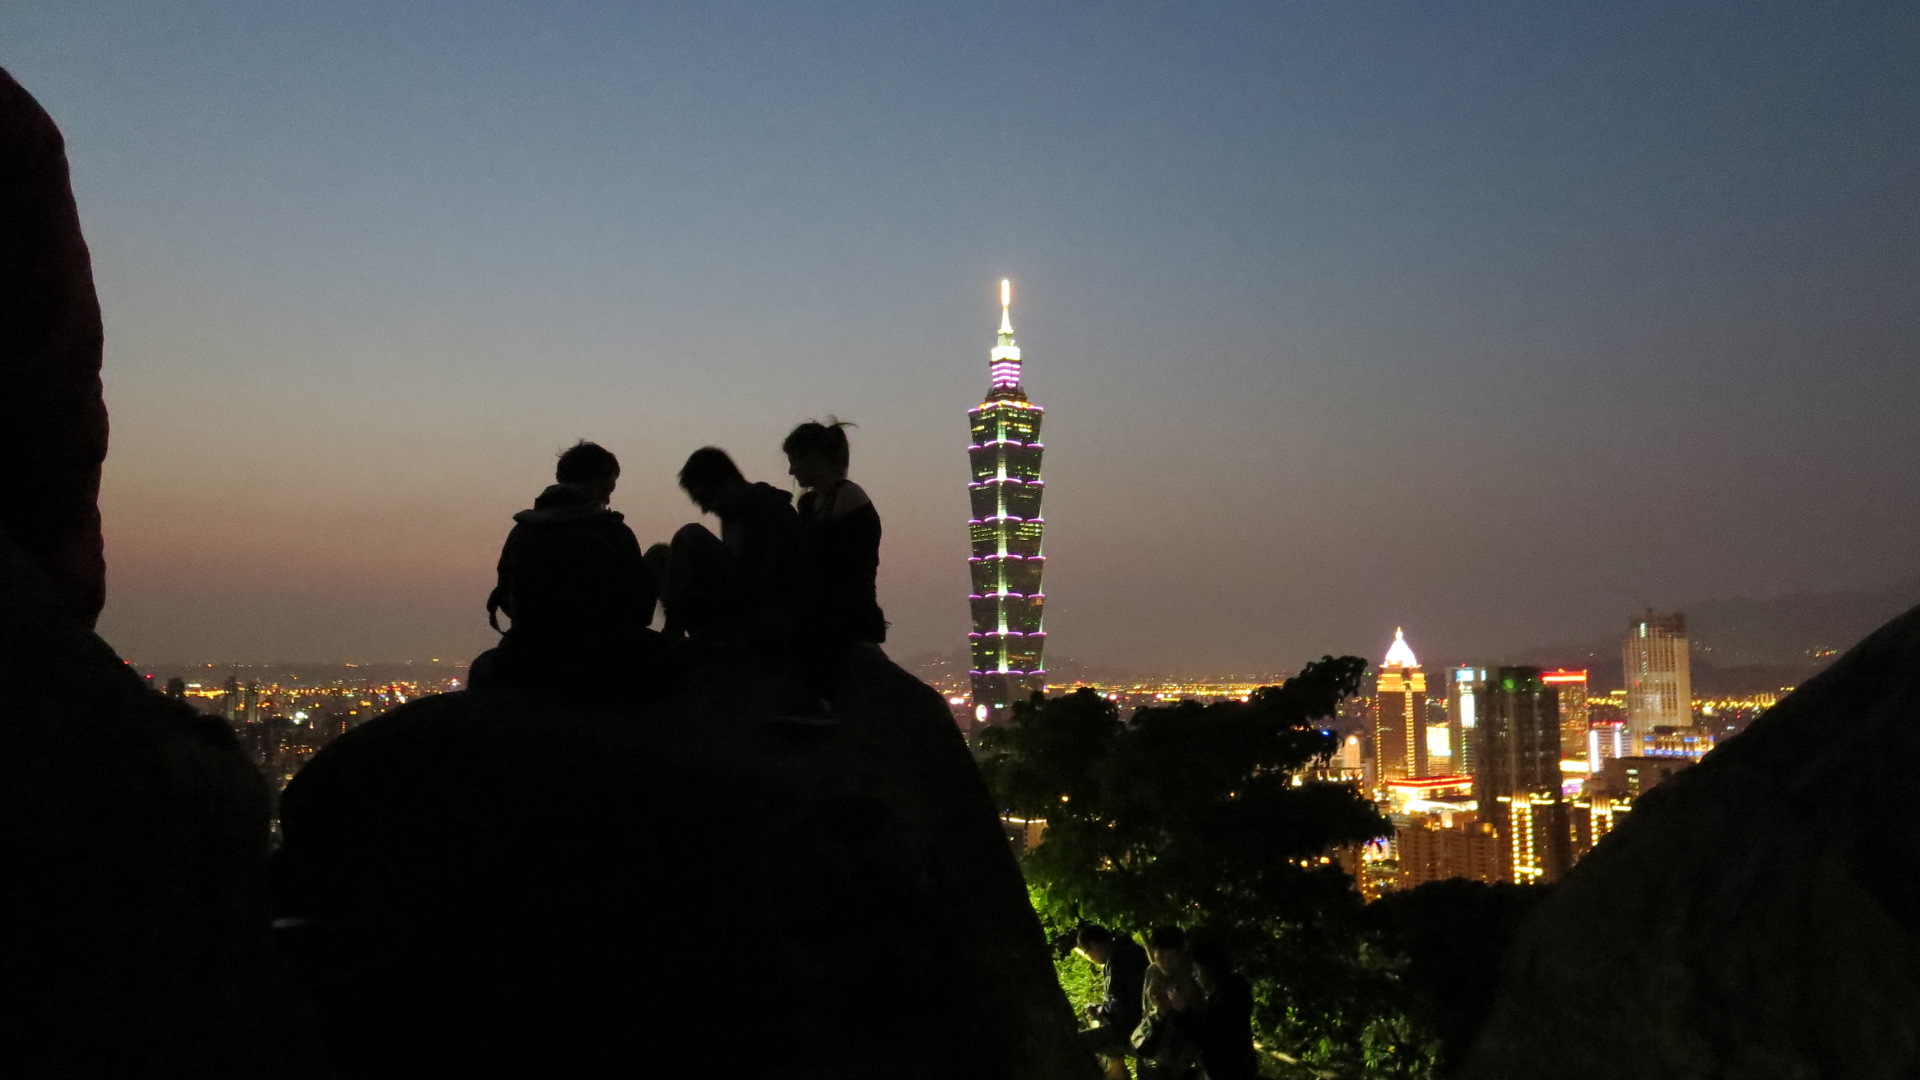 Taipei night photos from Elephant Mountain | Taiwan Fun Times